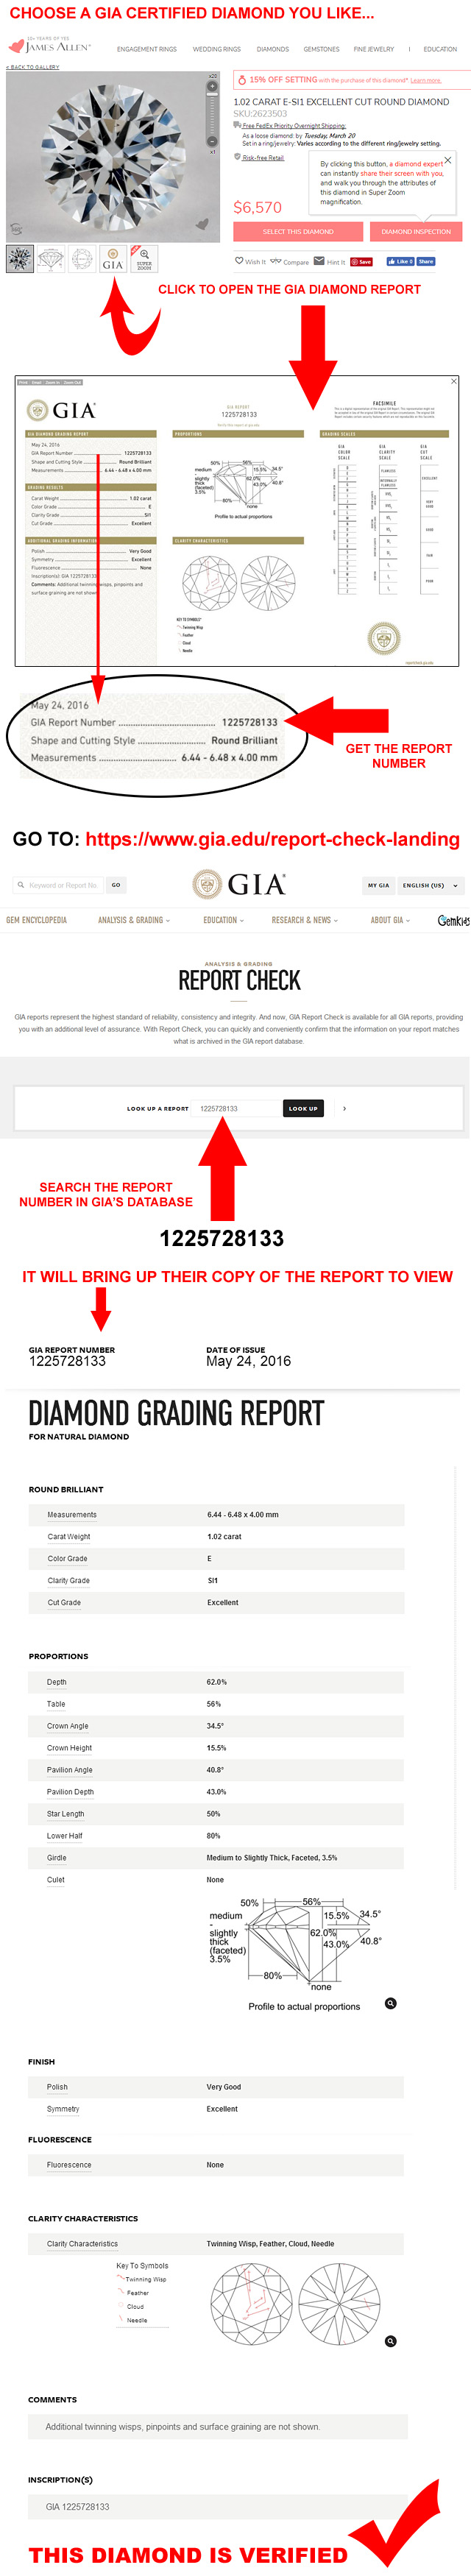 How To Verify A Diamond With GIA Diamond Report Check